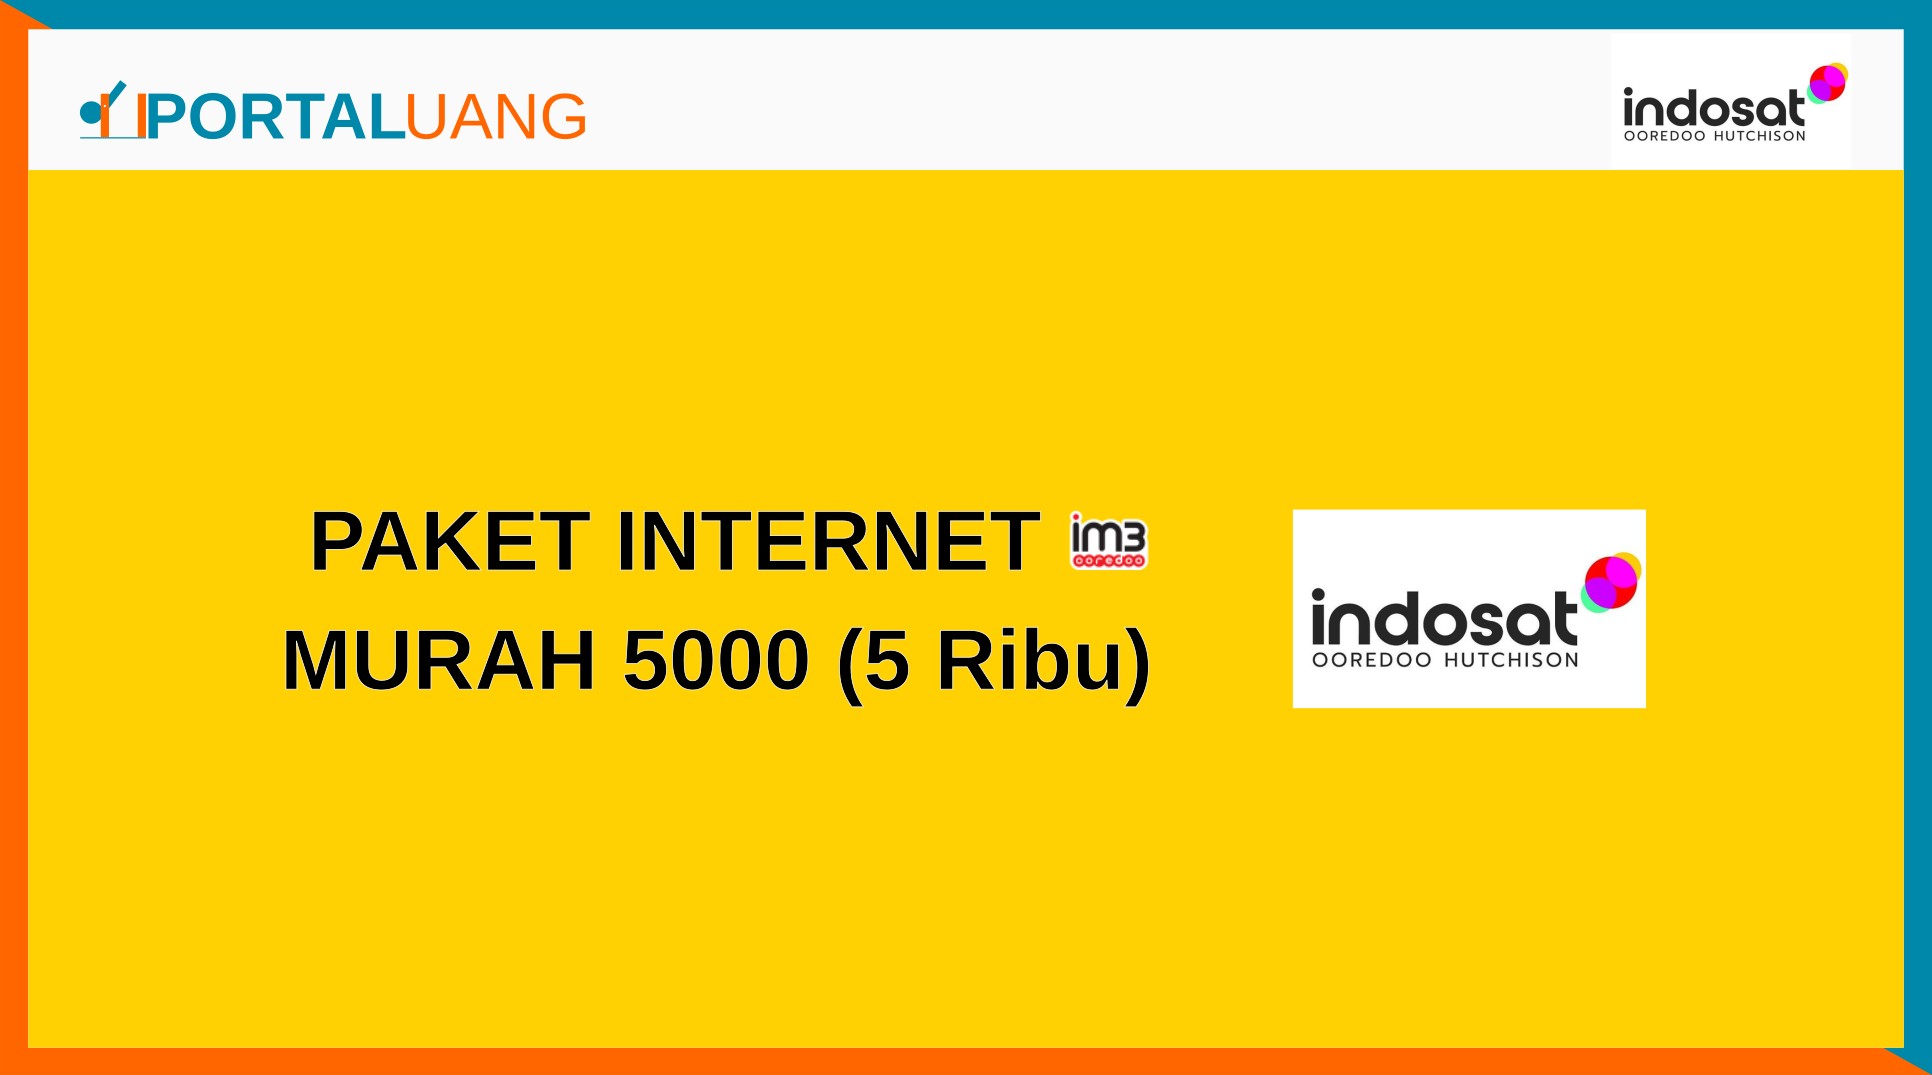 6 Paket Internet Indosat (IM3) Murah 5000 (5 Ribu) Juni 2022